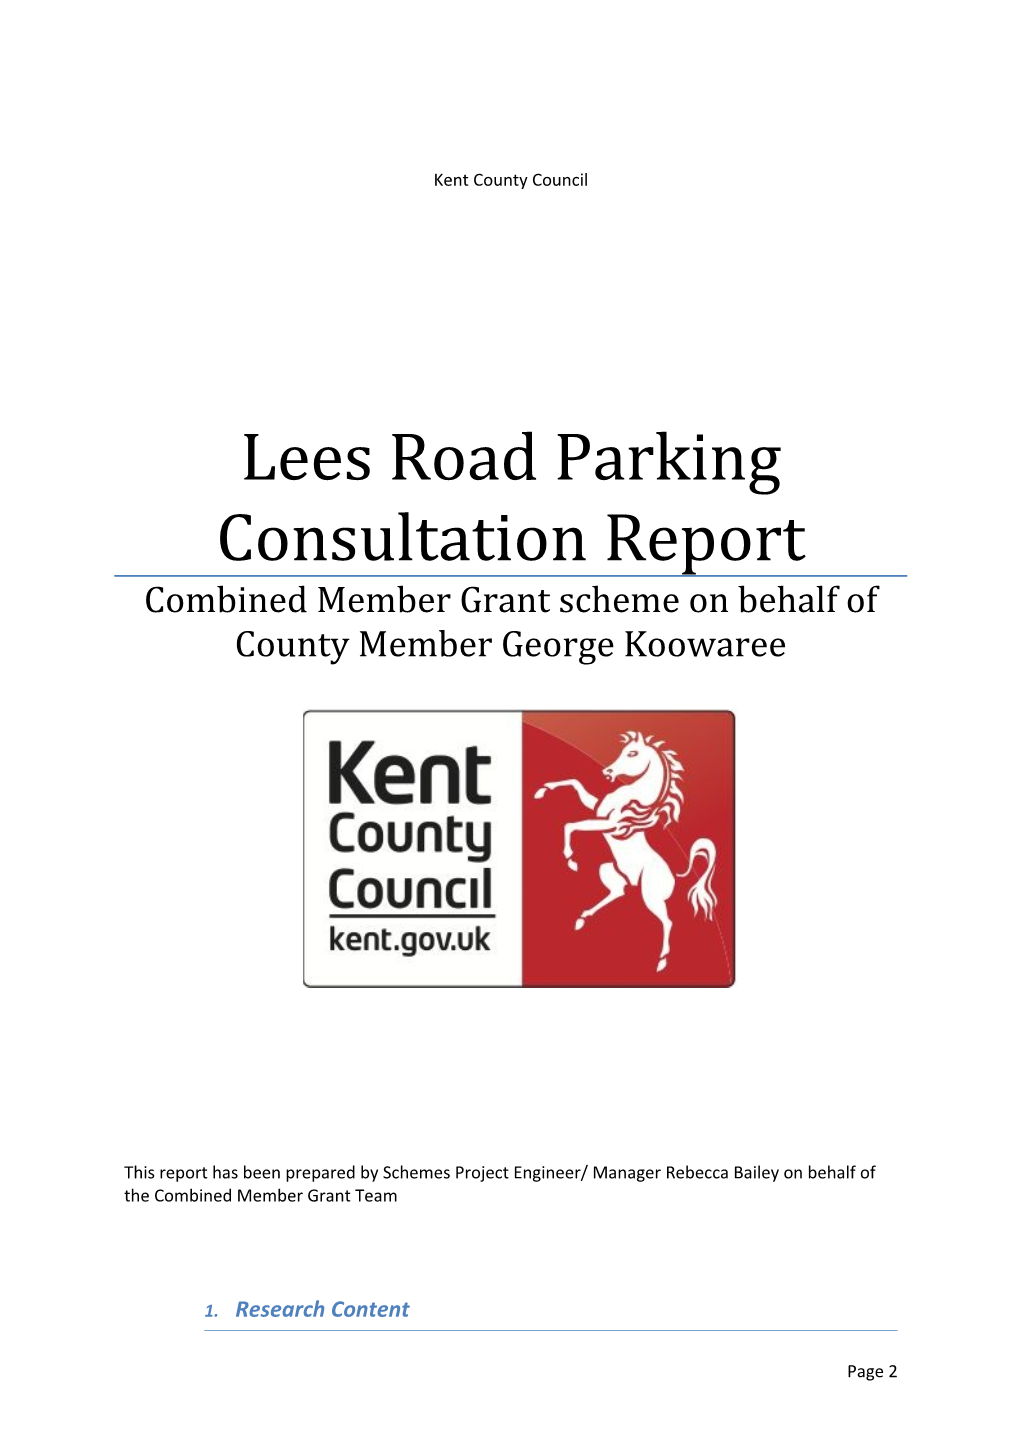 Lees Road Parking Consultation Report